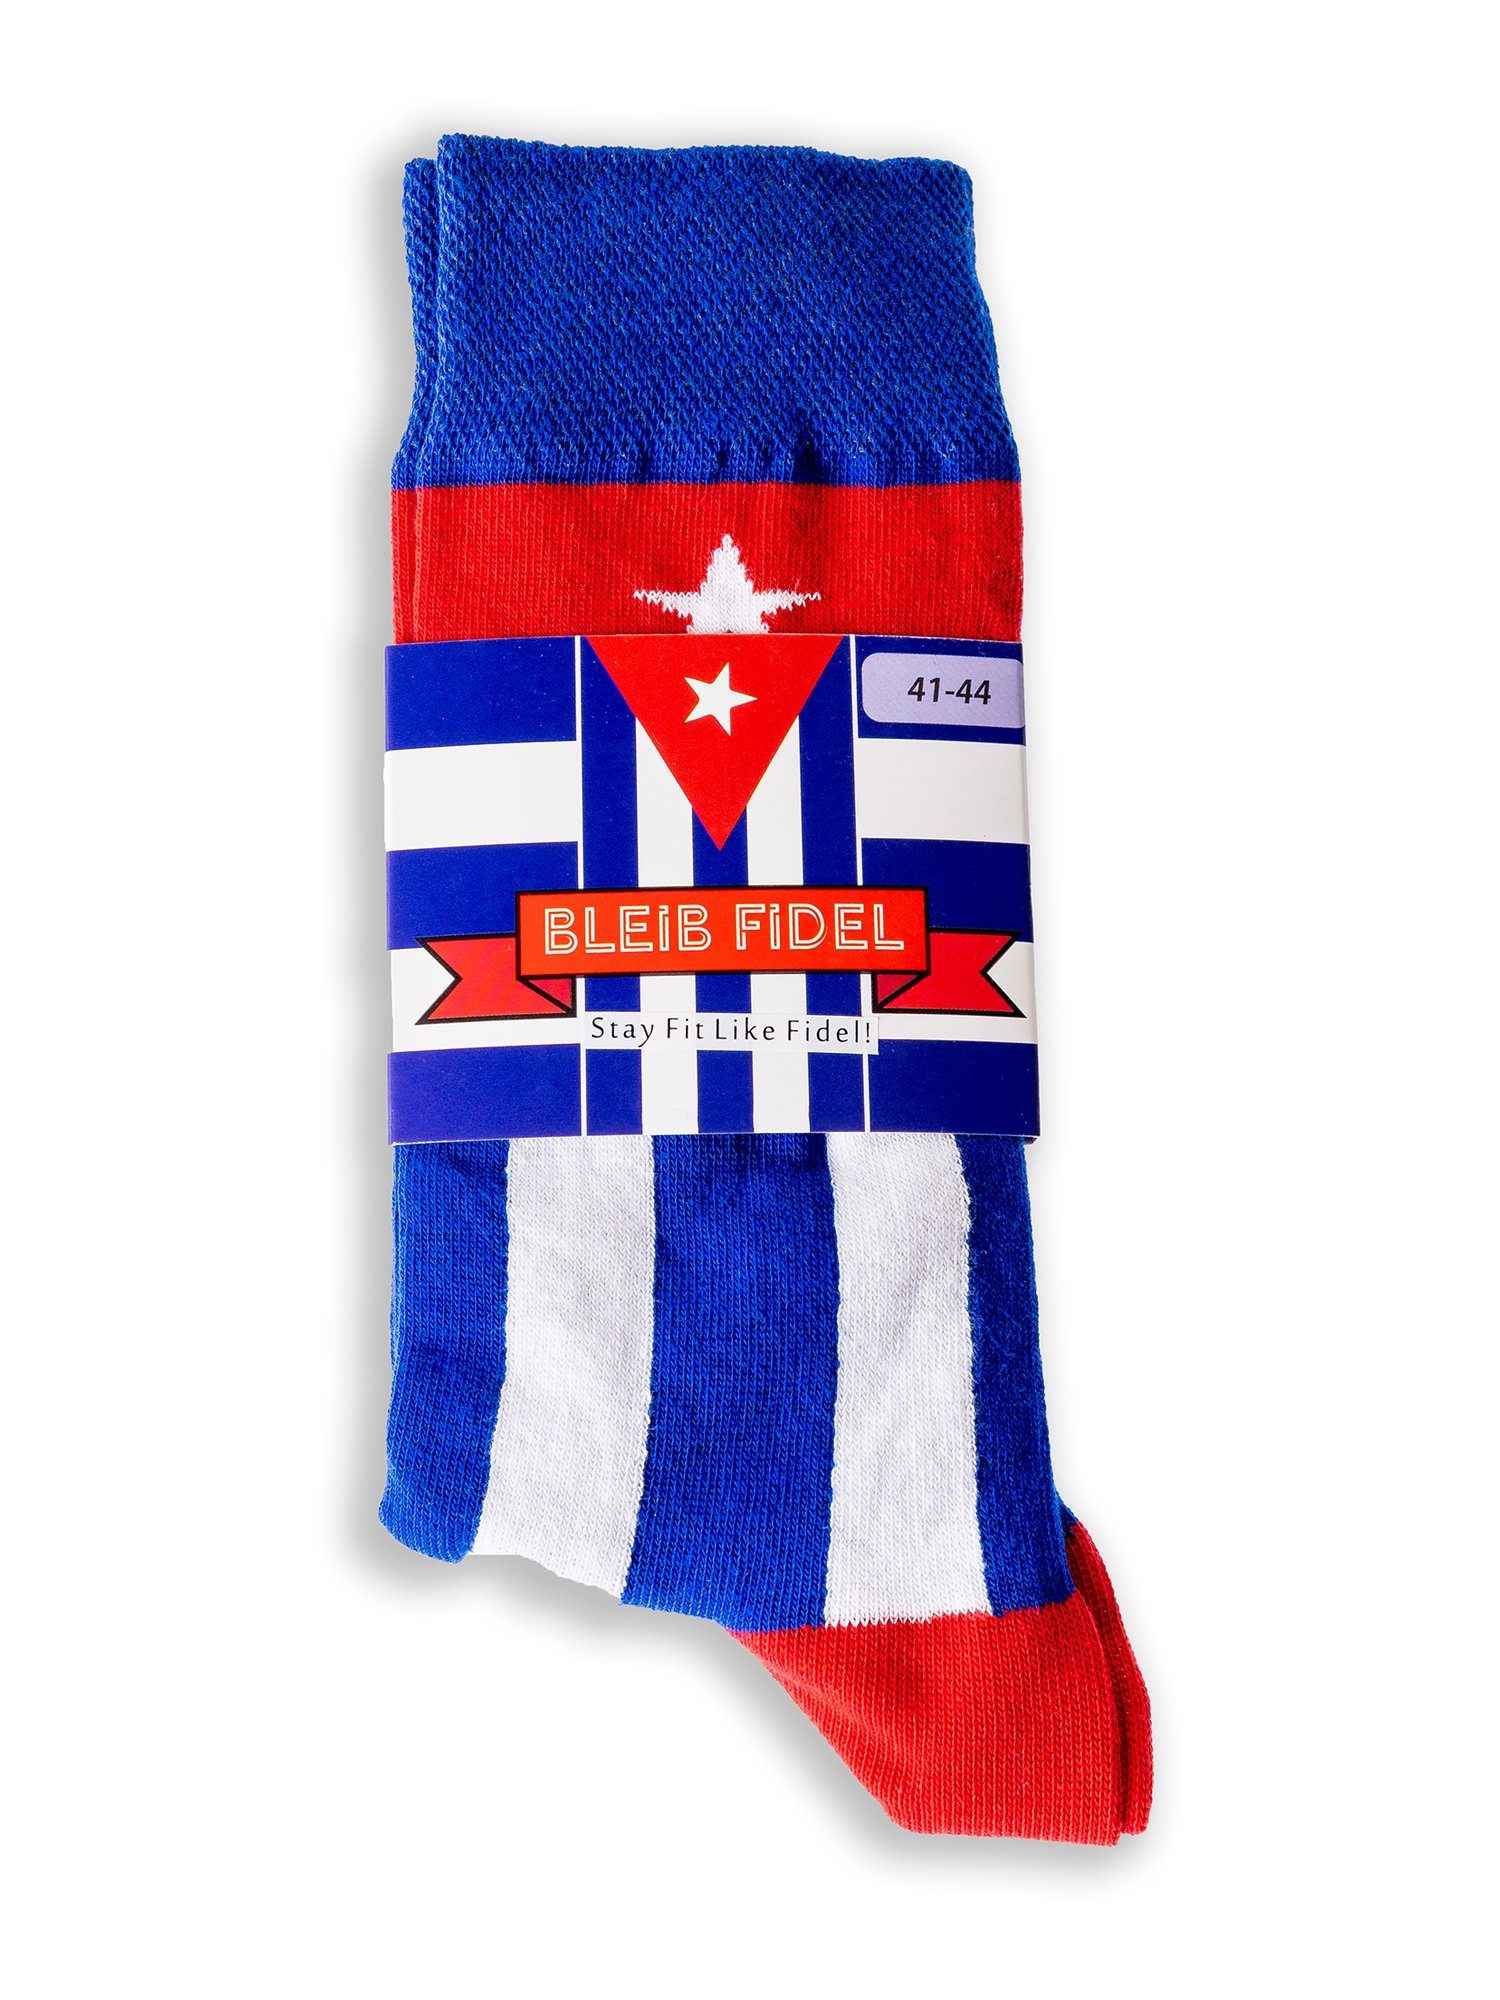 Chili Lifestyle Freizeitsocken Banderole Socks Fidel Leisure